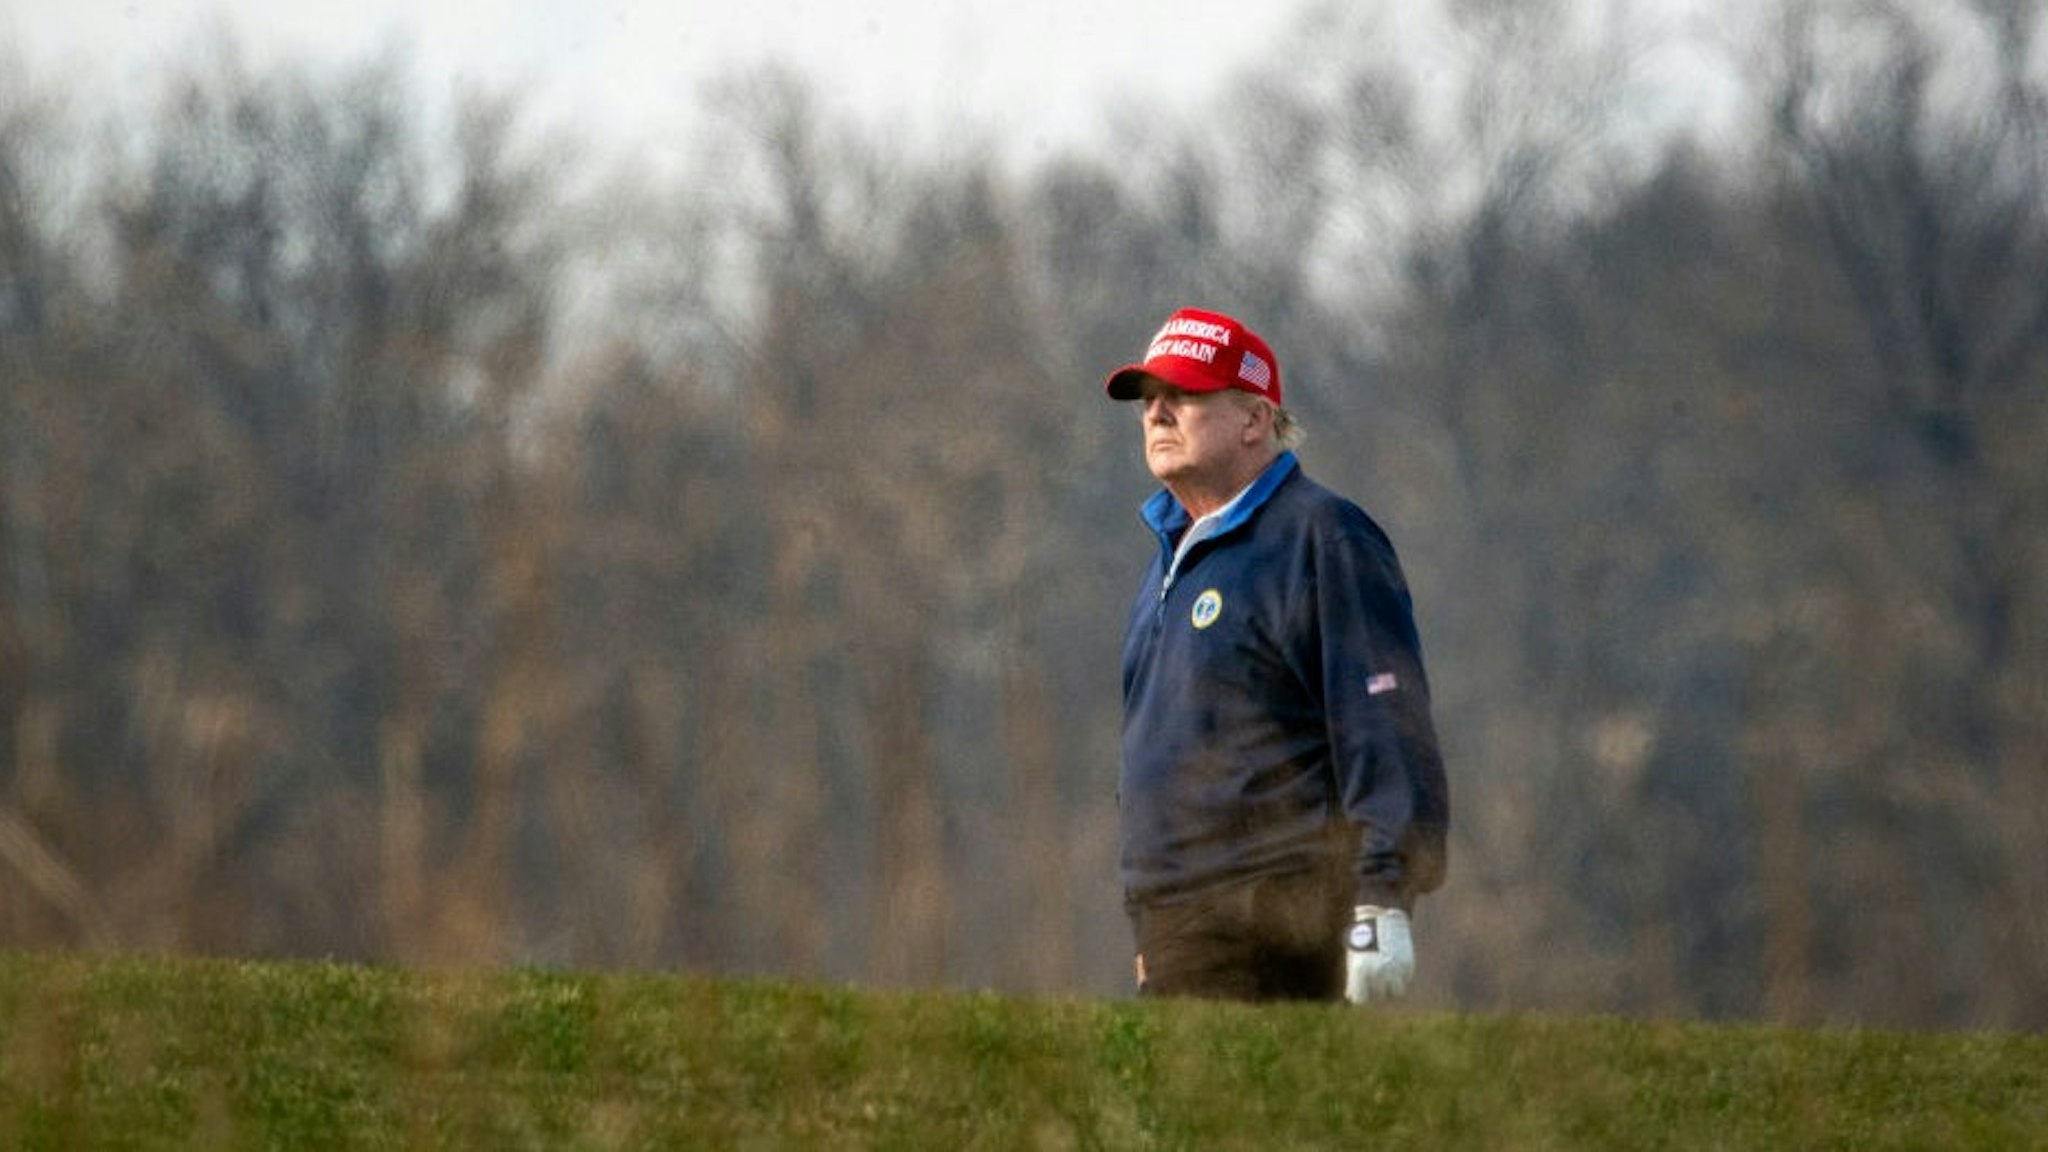 STERLING, VA - DECEMBER 13: U.S. President Donald Trump golfs at Trump National Golf Club on December 13, 2020 in Sterling, Virginia. (Photo by